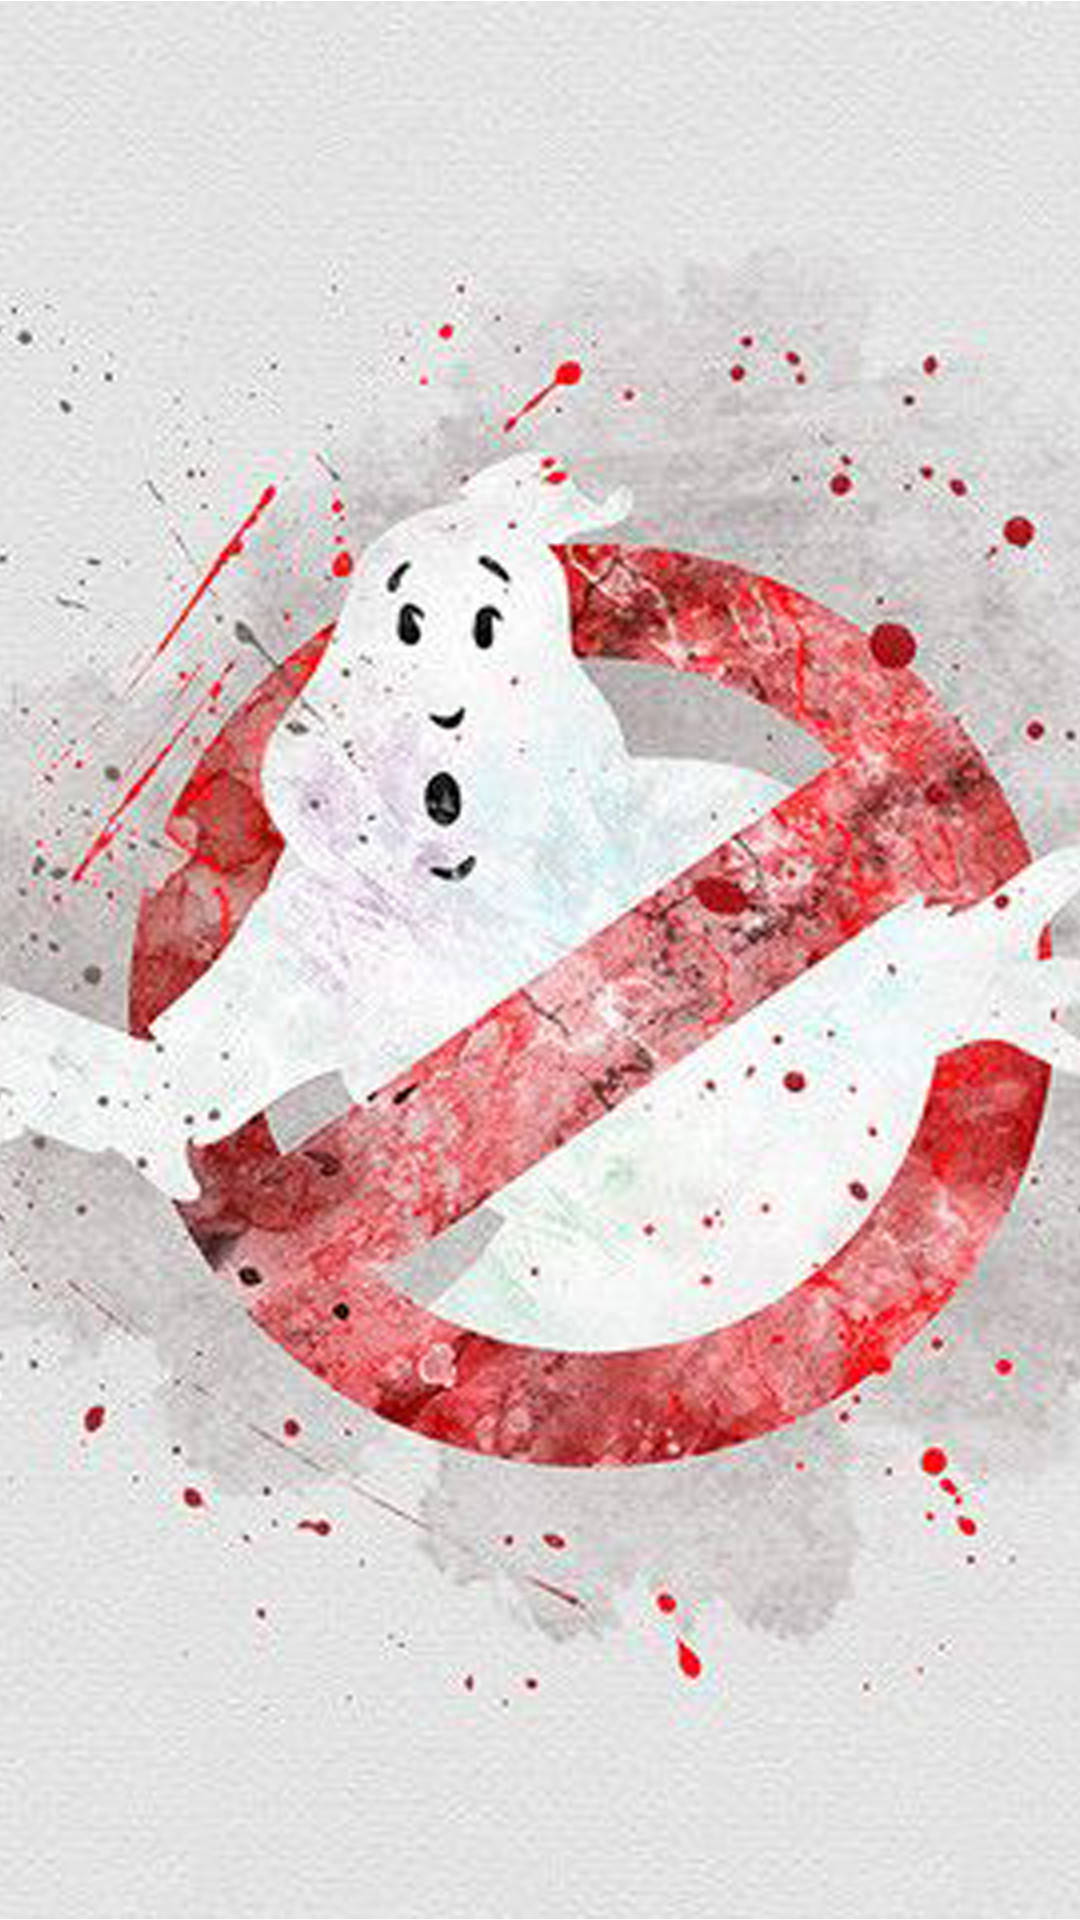 Ghostbusters - Always Here to Help Wallpaper